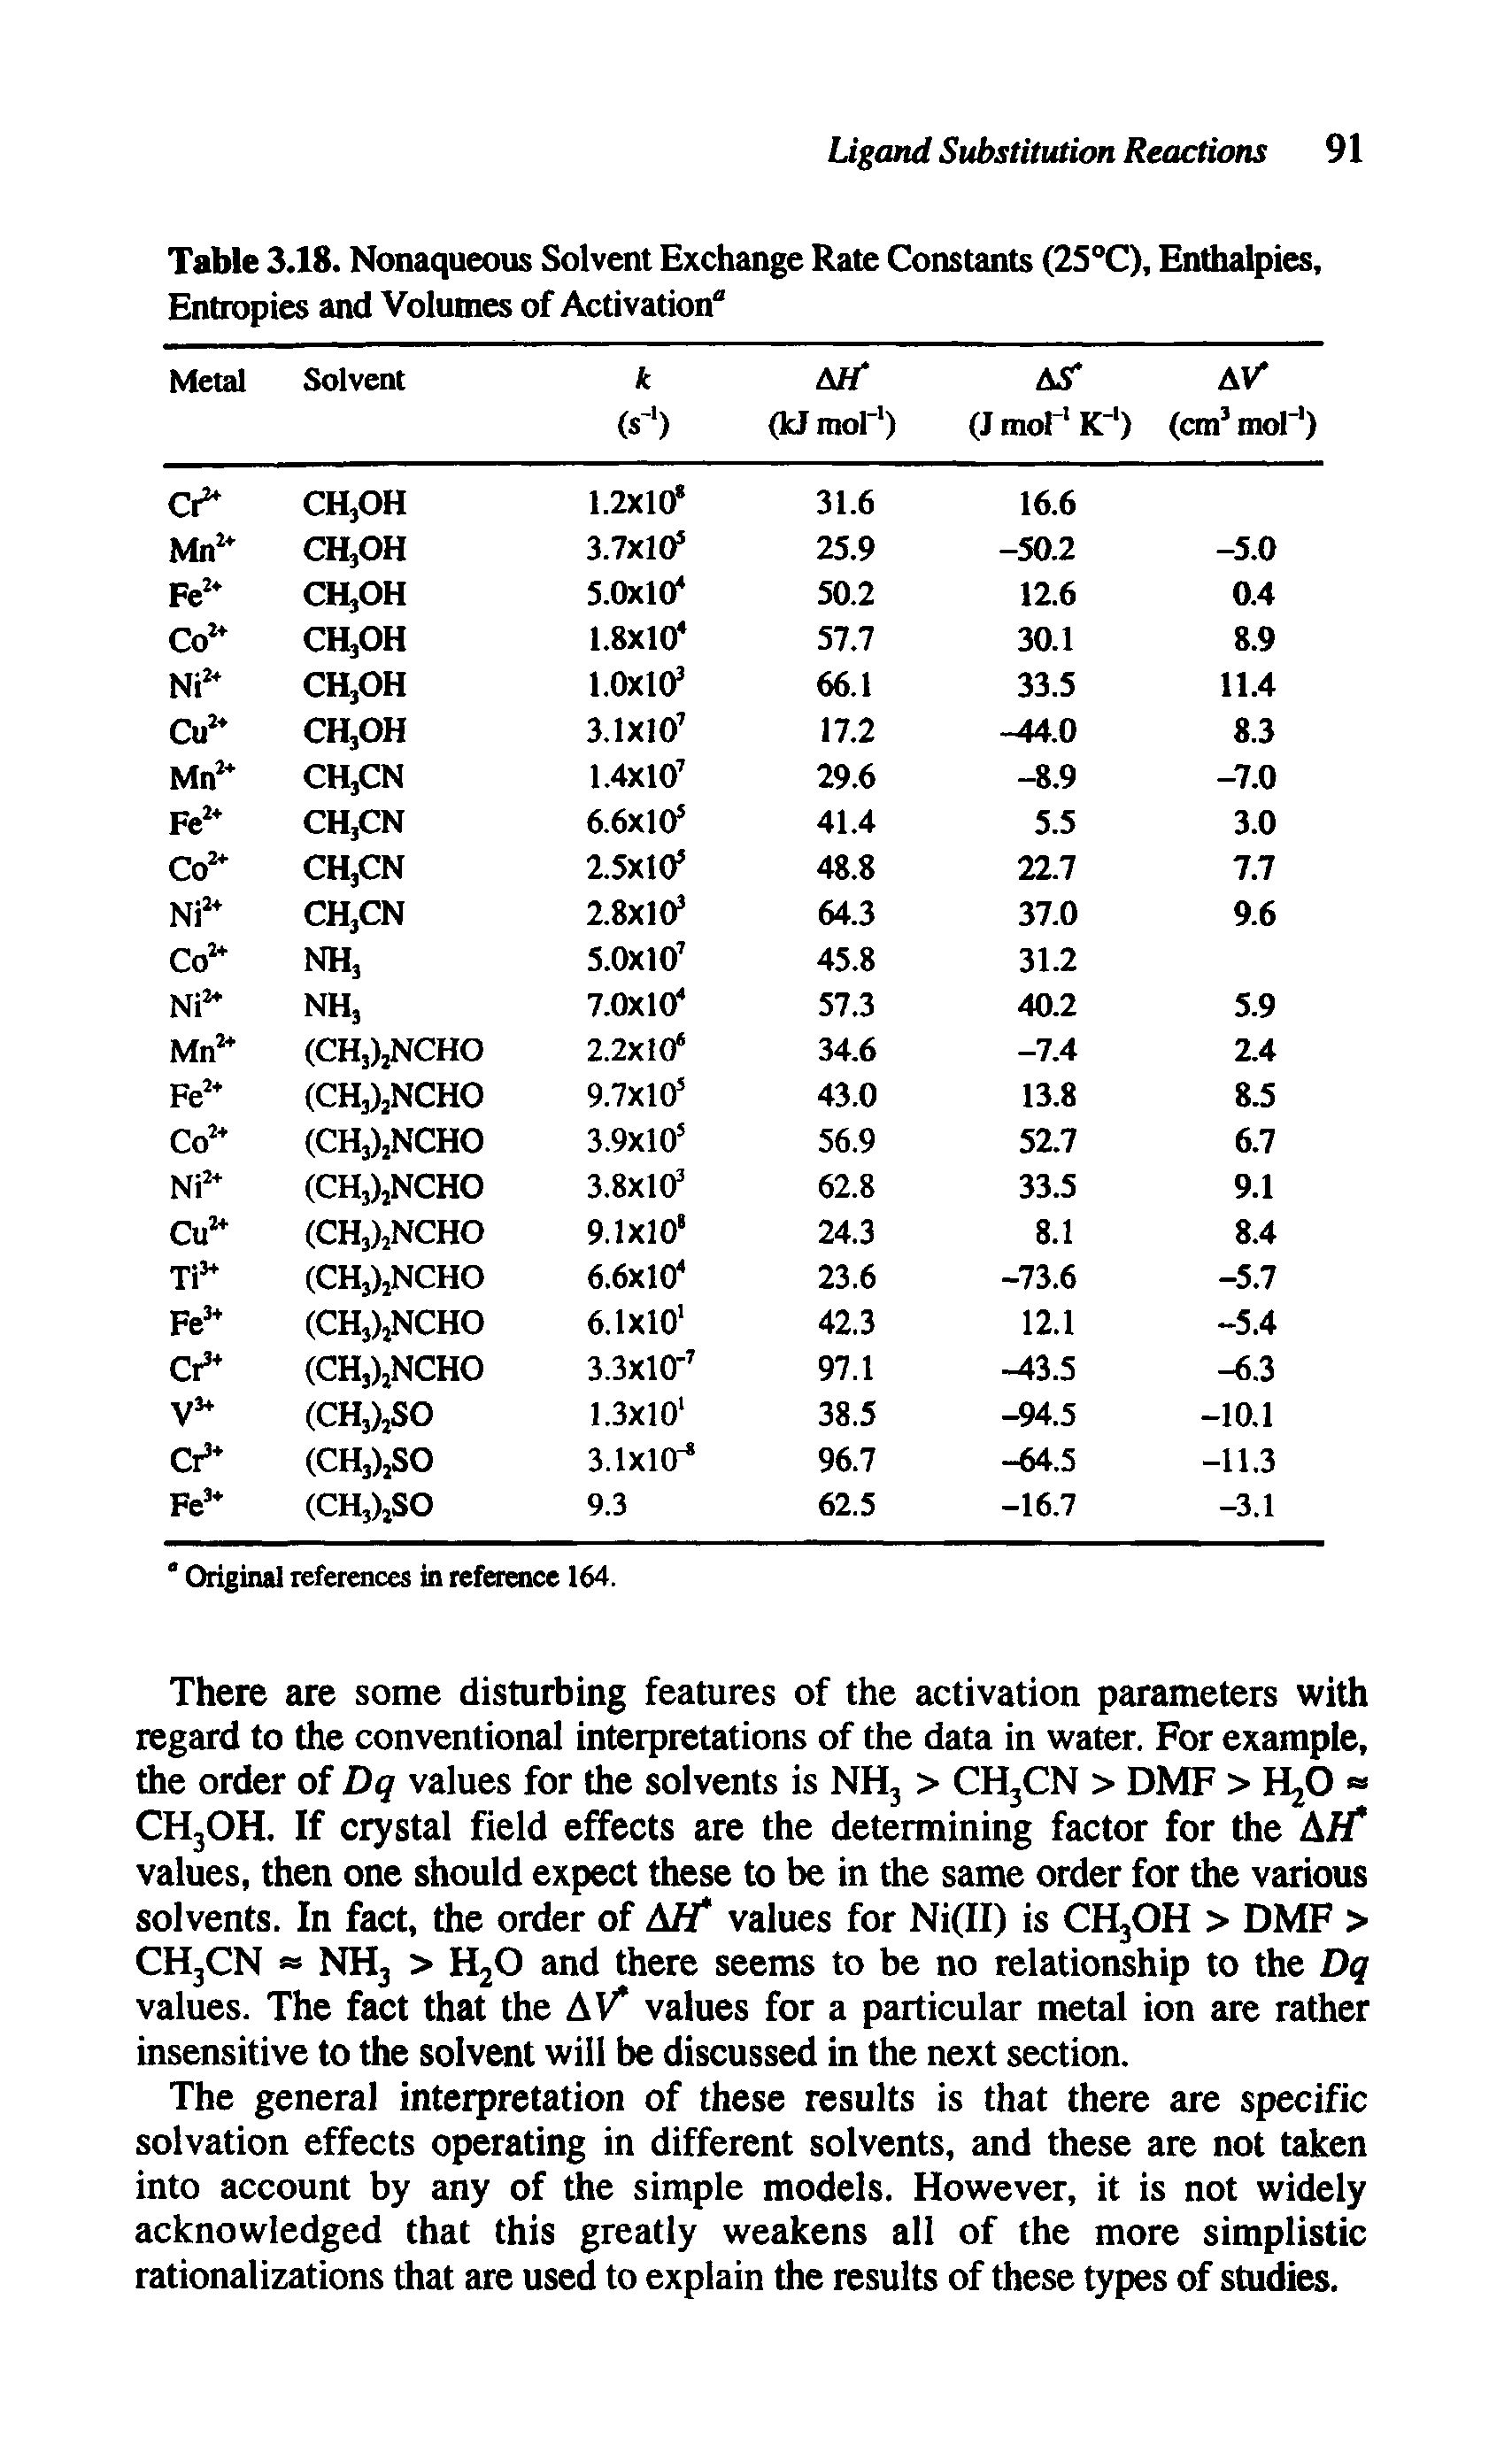 Table 3.18. Nonaqueous Solvent Exchange Rate Constants (2S°C), idialpies. Entropies and Volumes of Activation ...